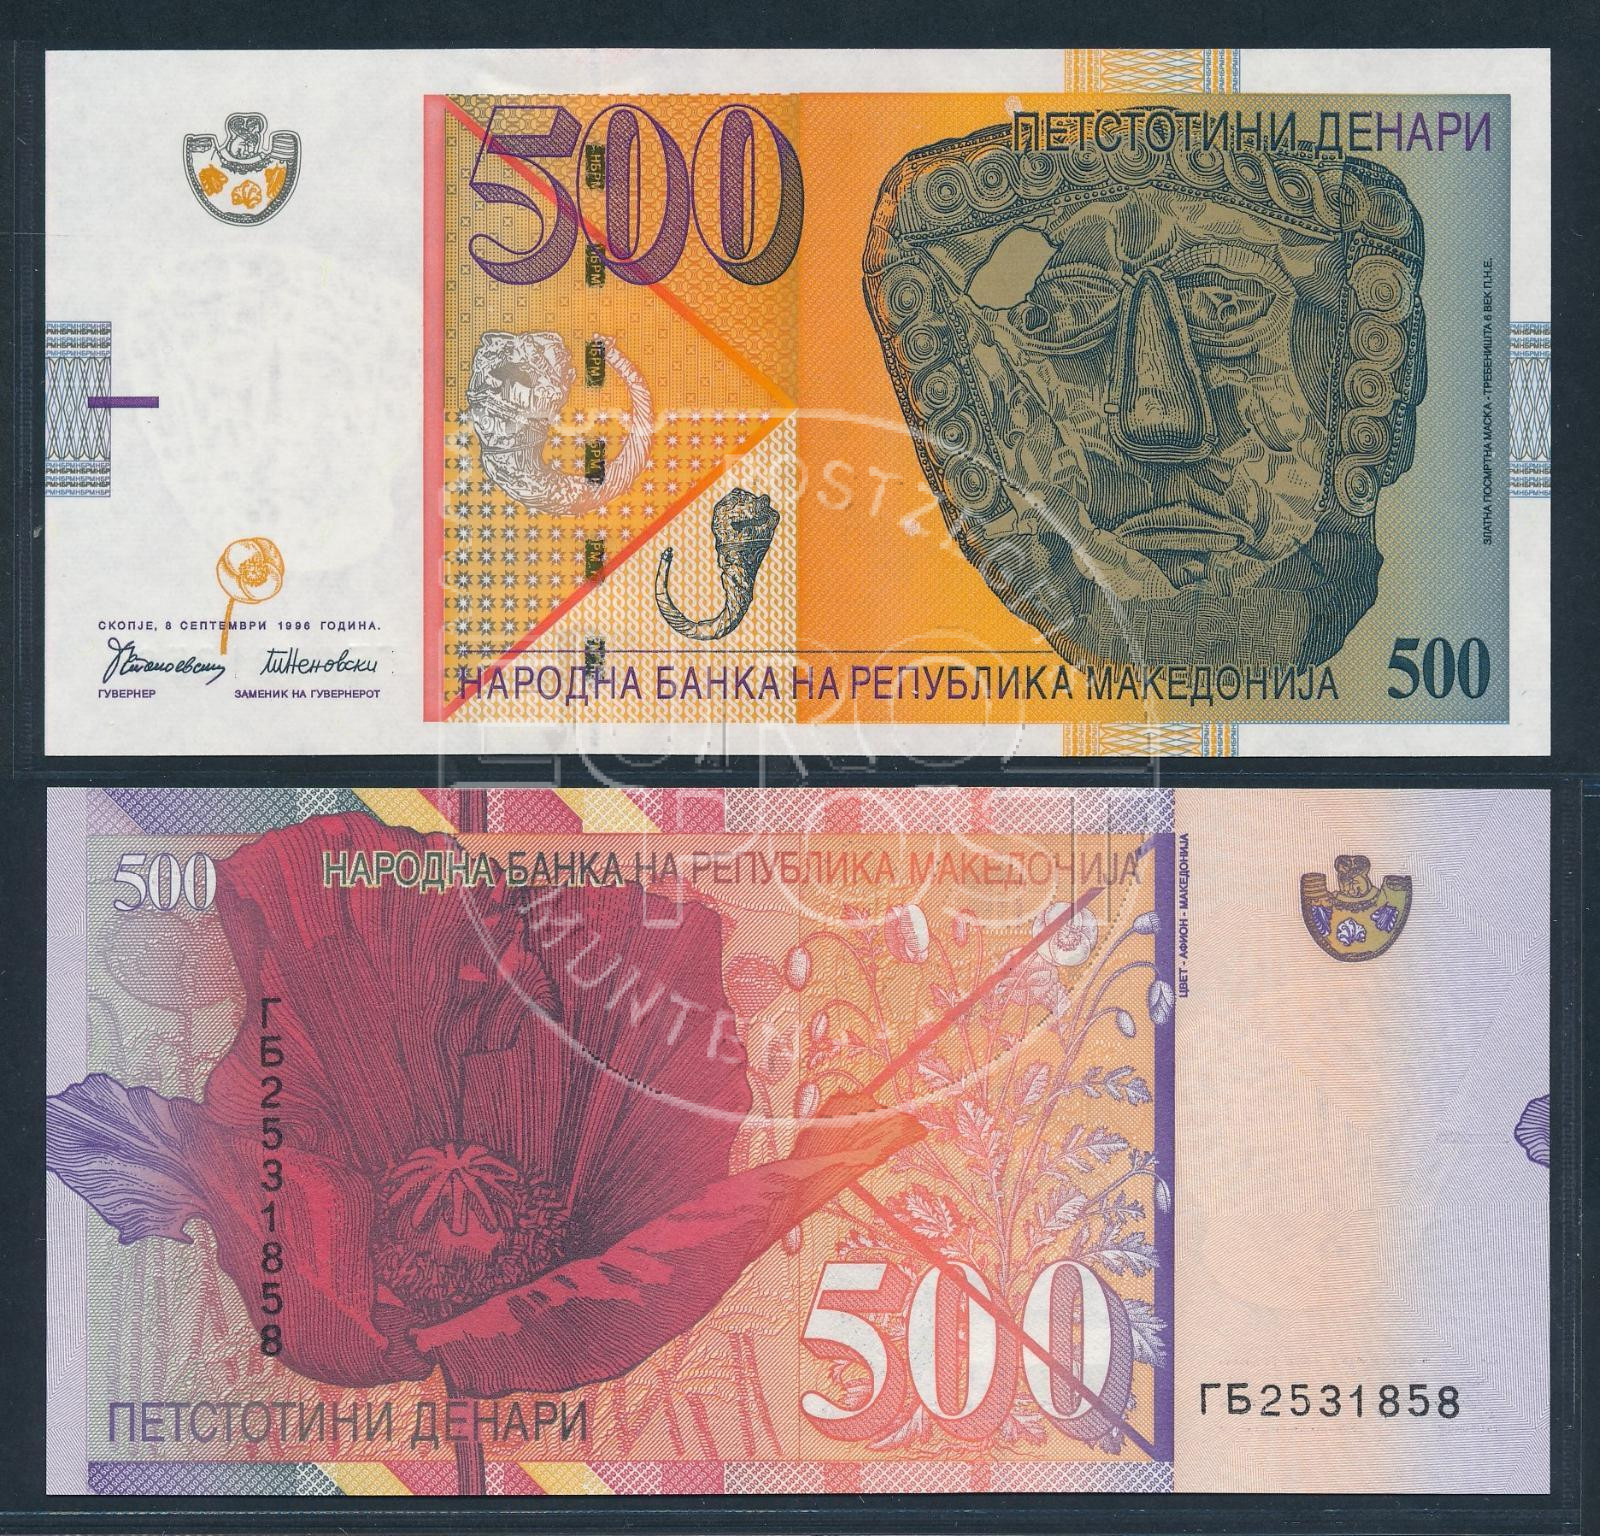 Macedonia 1996 500 Denari banknote UNC - Europost Philately & Numismatics